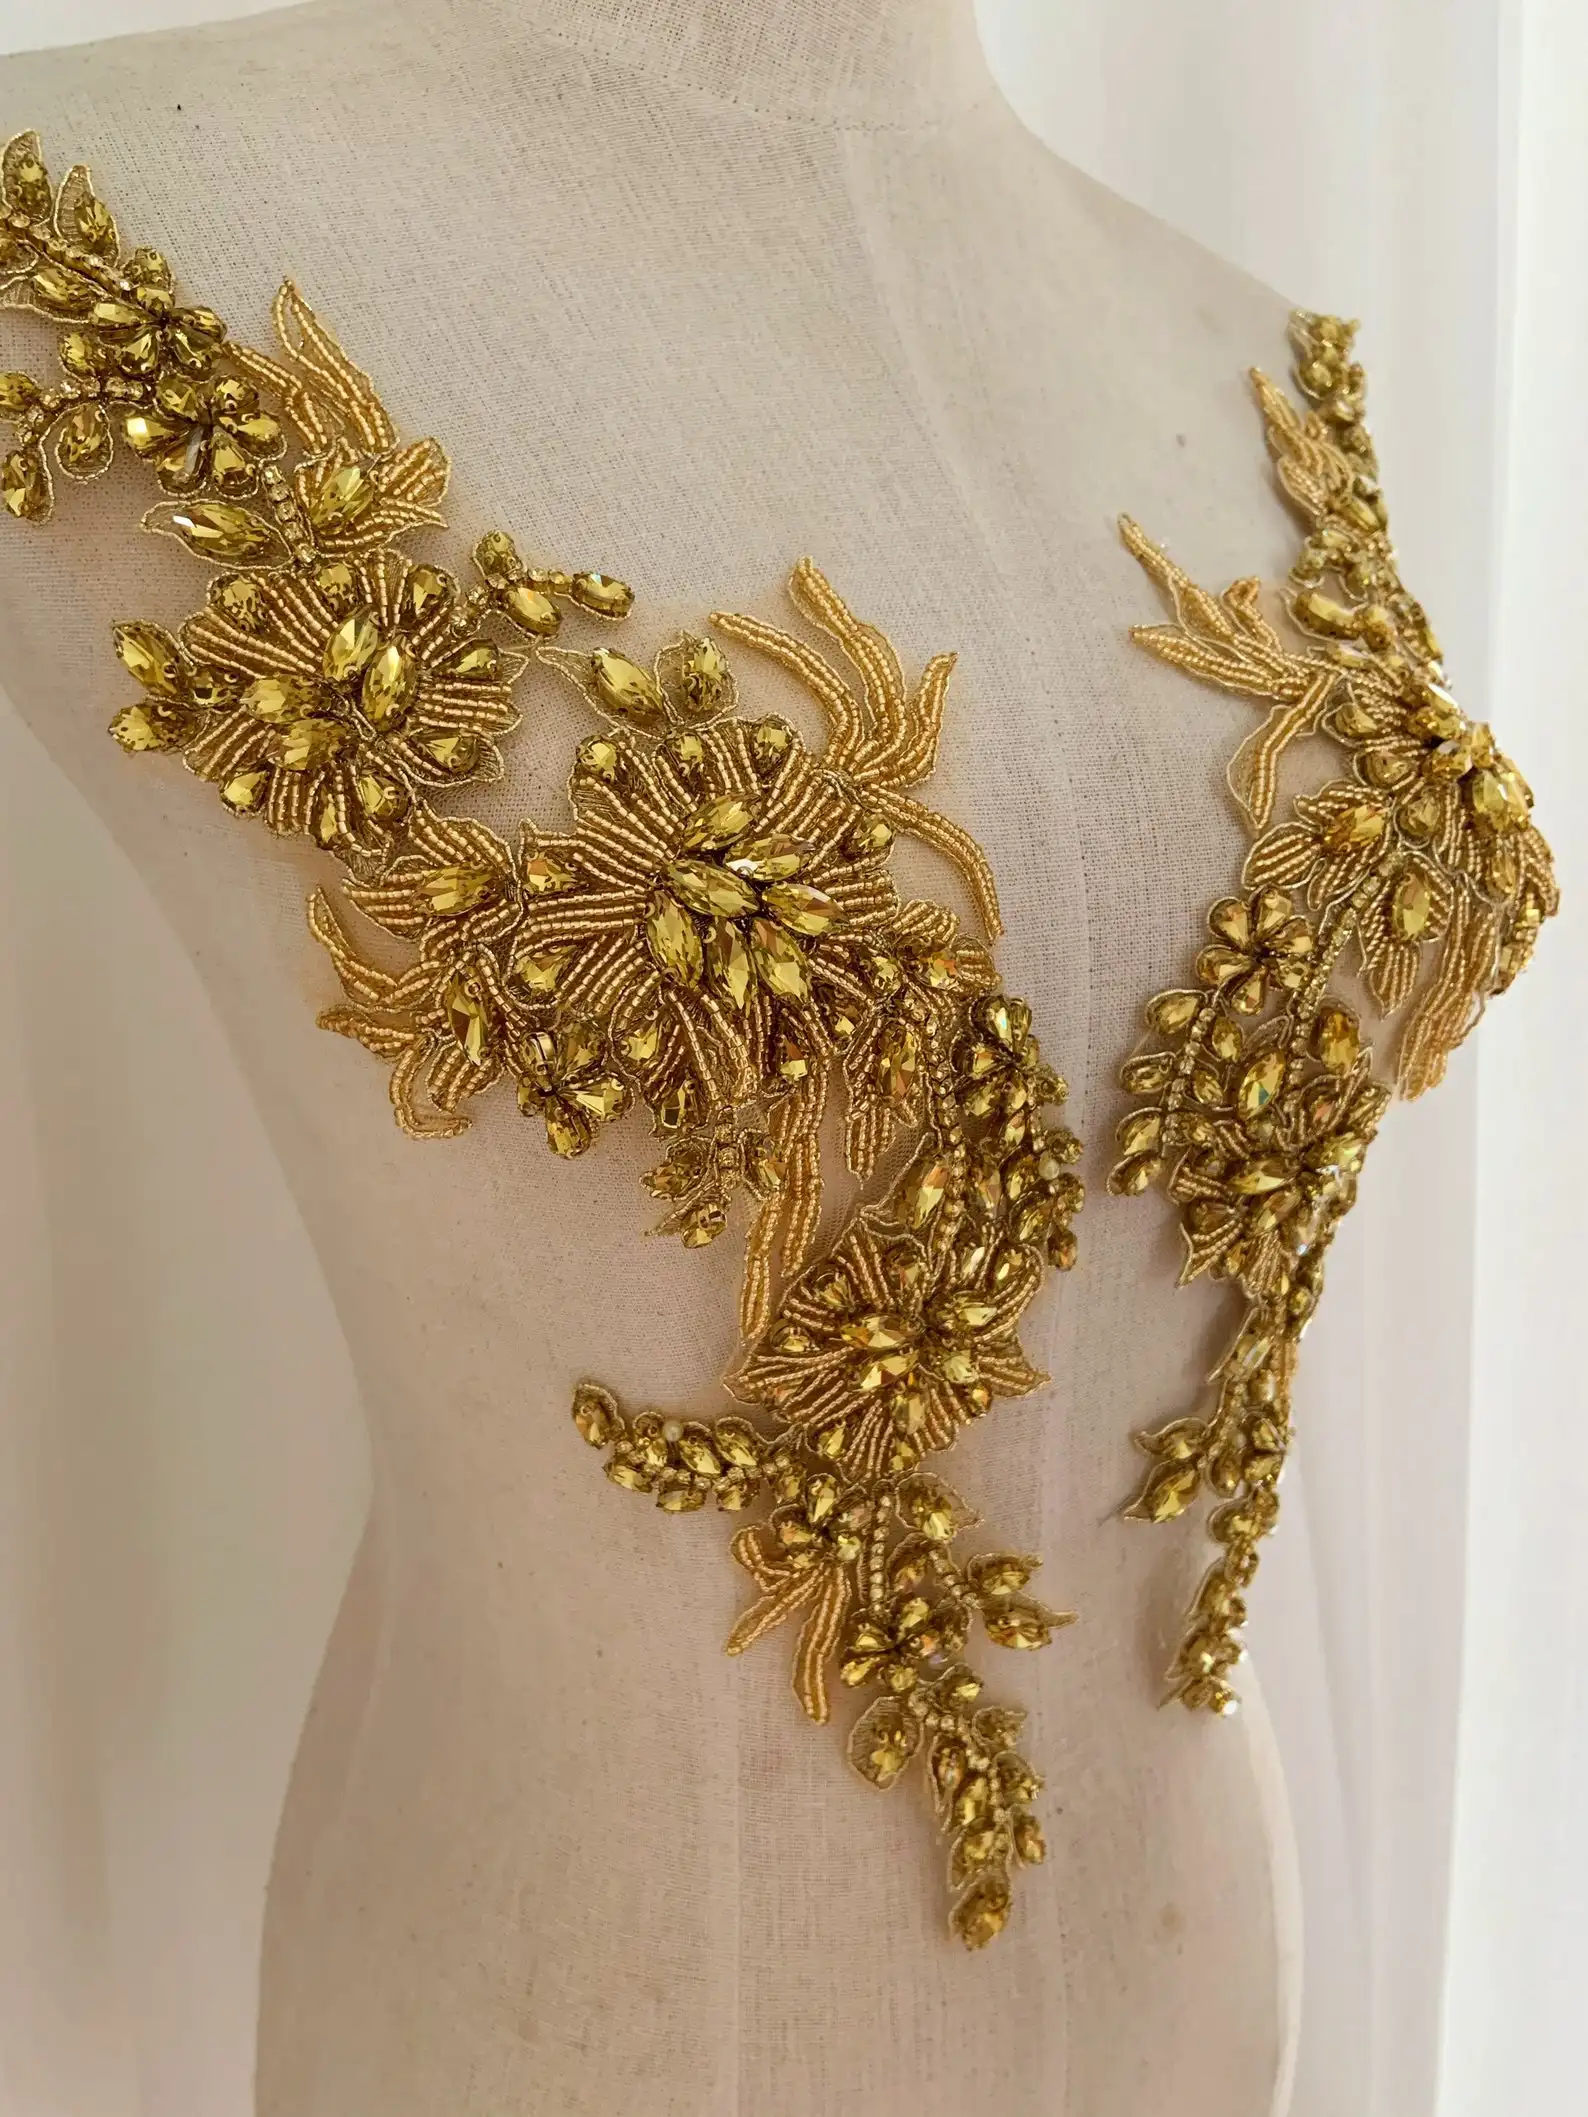 2 PCS Rhinestone Applique Gold Garter Sew Iron on Crystal Patch for Bridal  Wedding Dress Sash Belt Clothes,2pcs